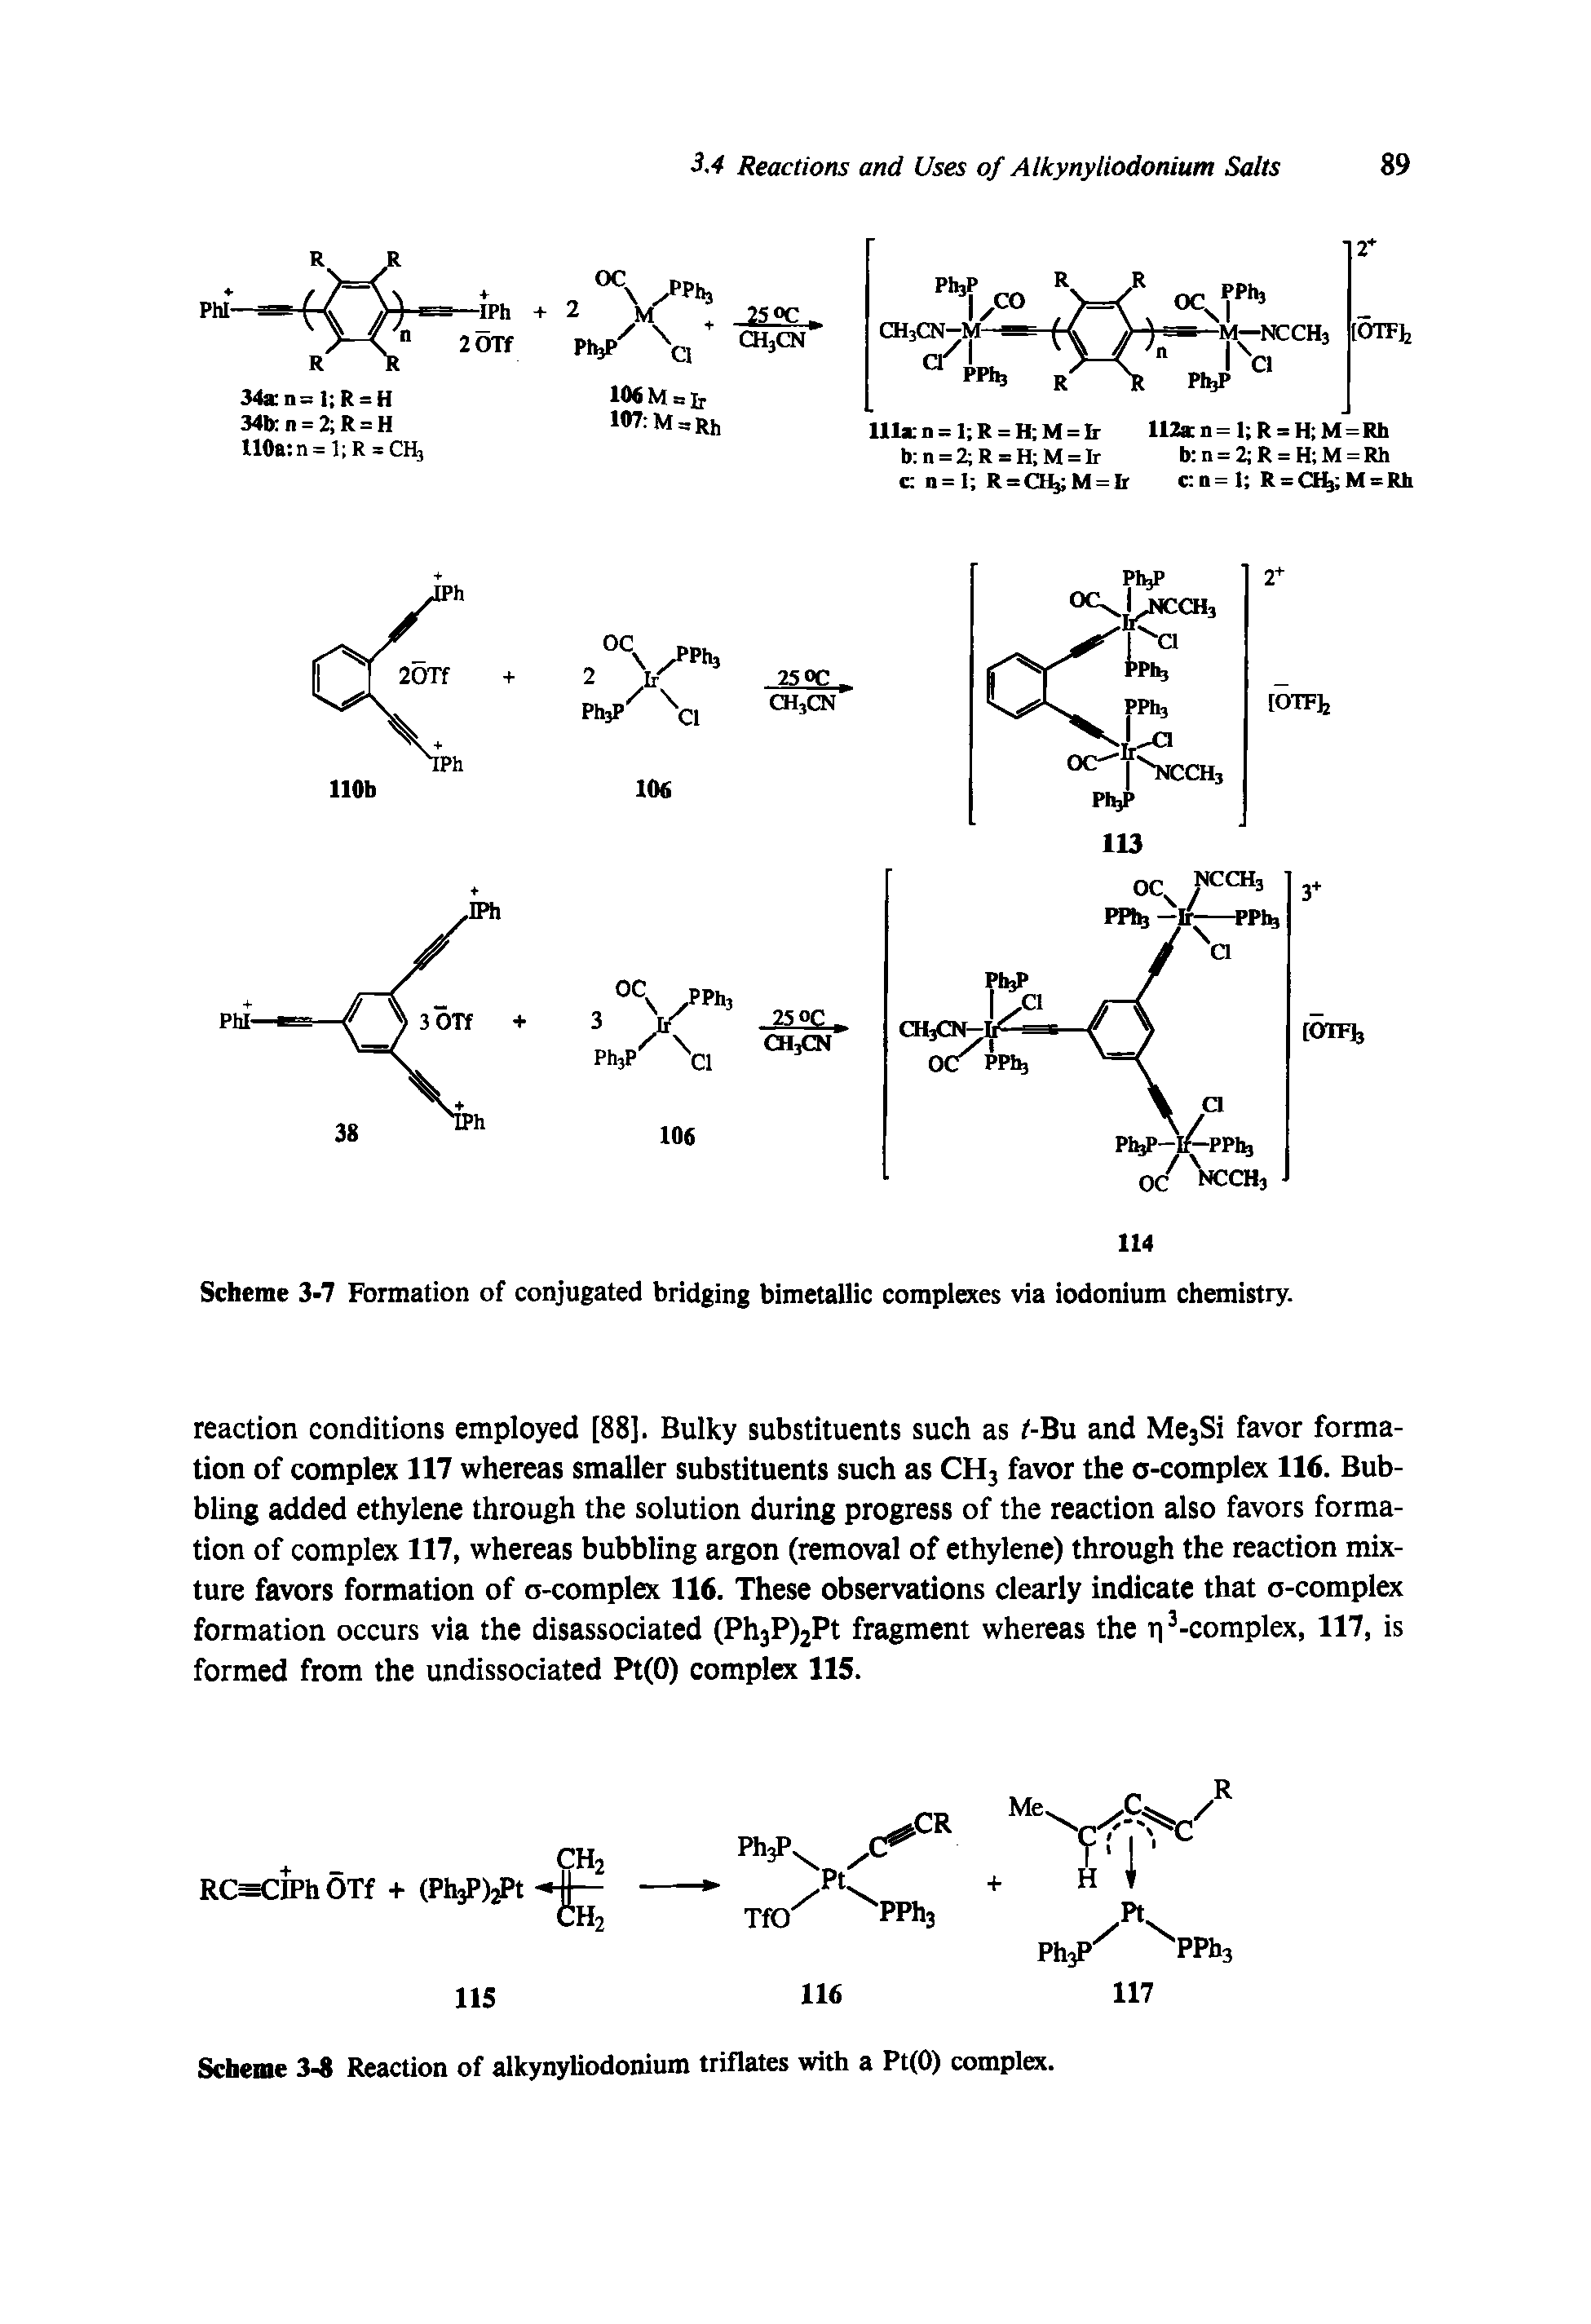 Scheme 3-8 Reaction of alkynyliodonium triflates with a Pt(0) complex.